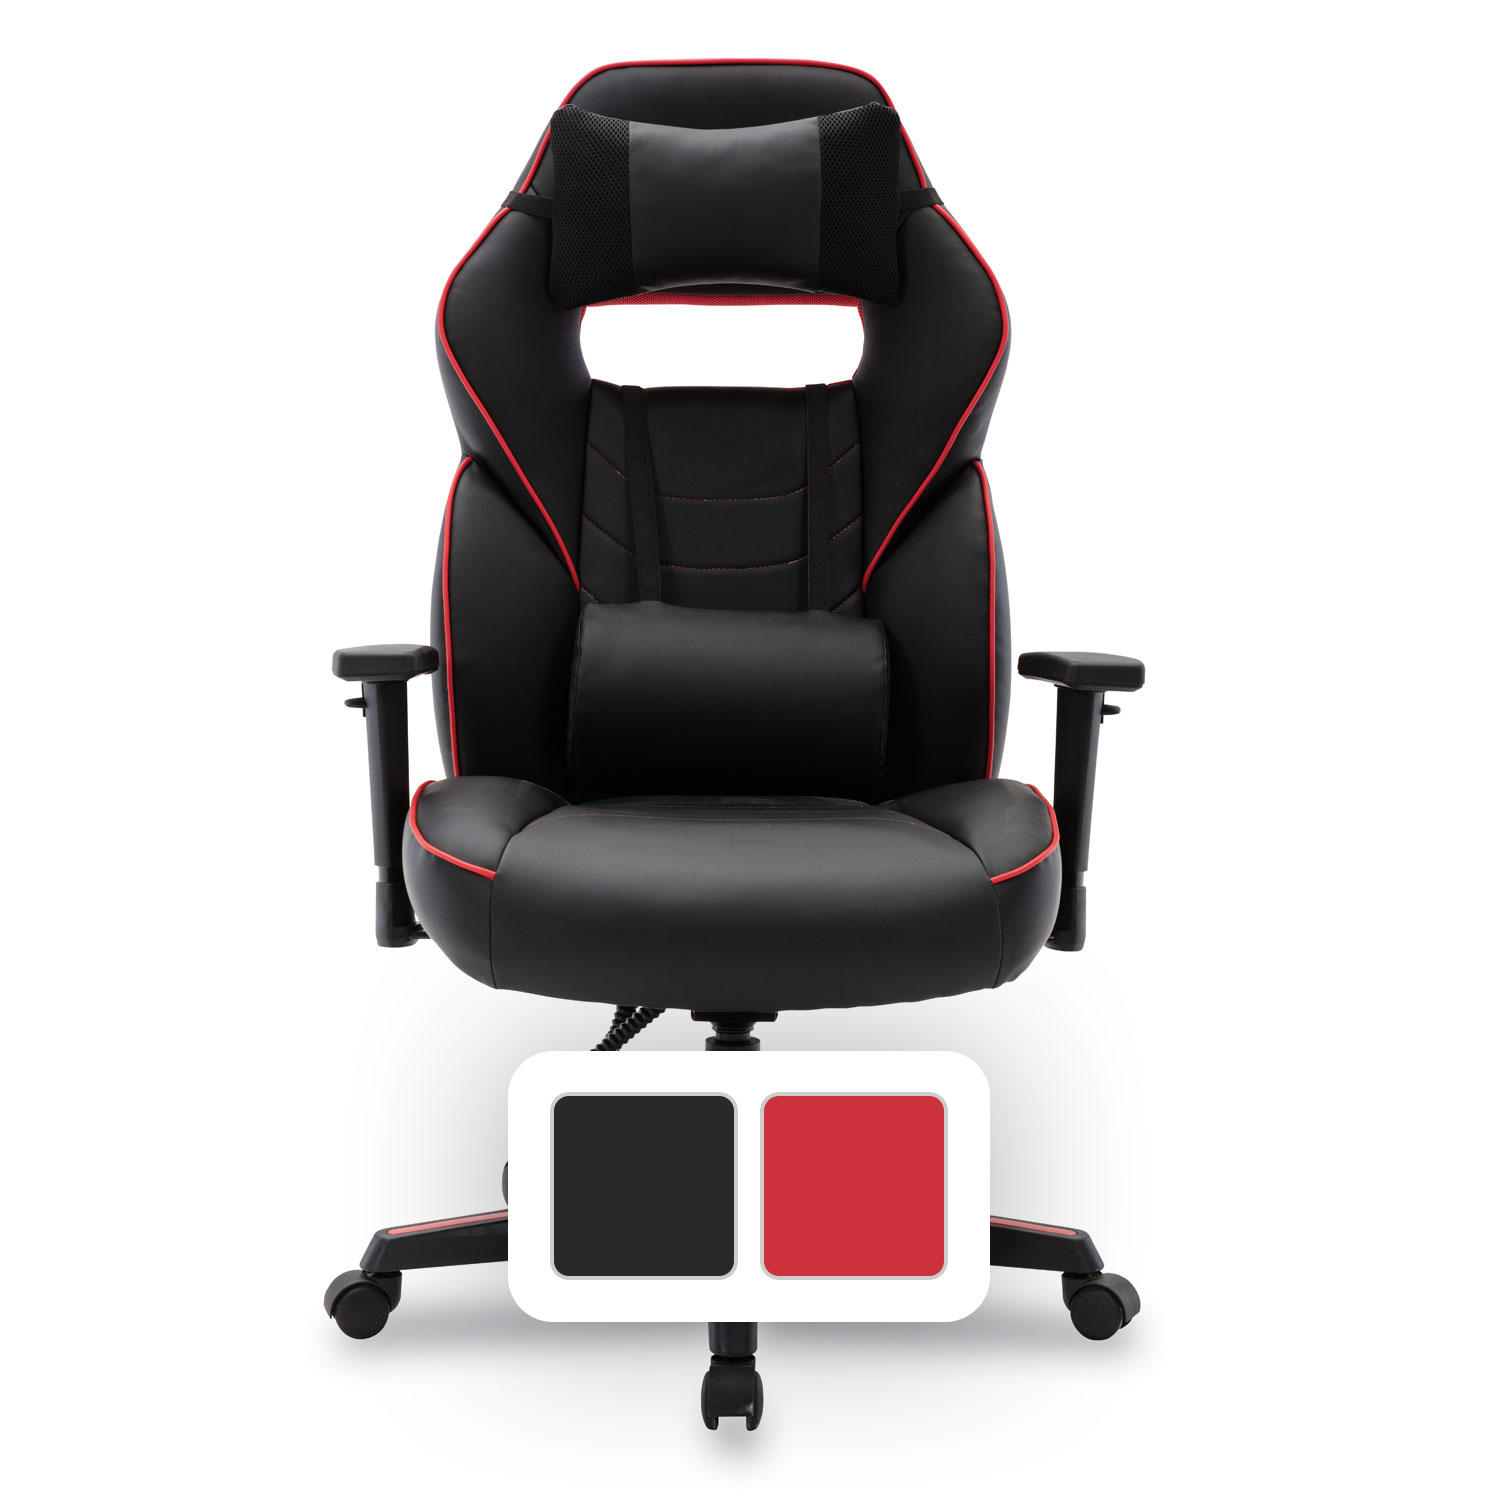 UPC 042167000035 product image for Alera Racing Style Ergonomic Gaming Chair, Black/Red | upcitemdb.com